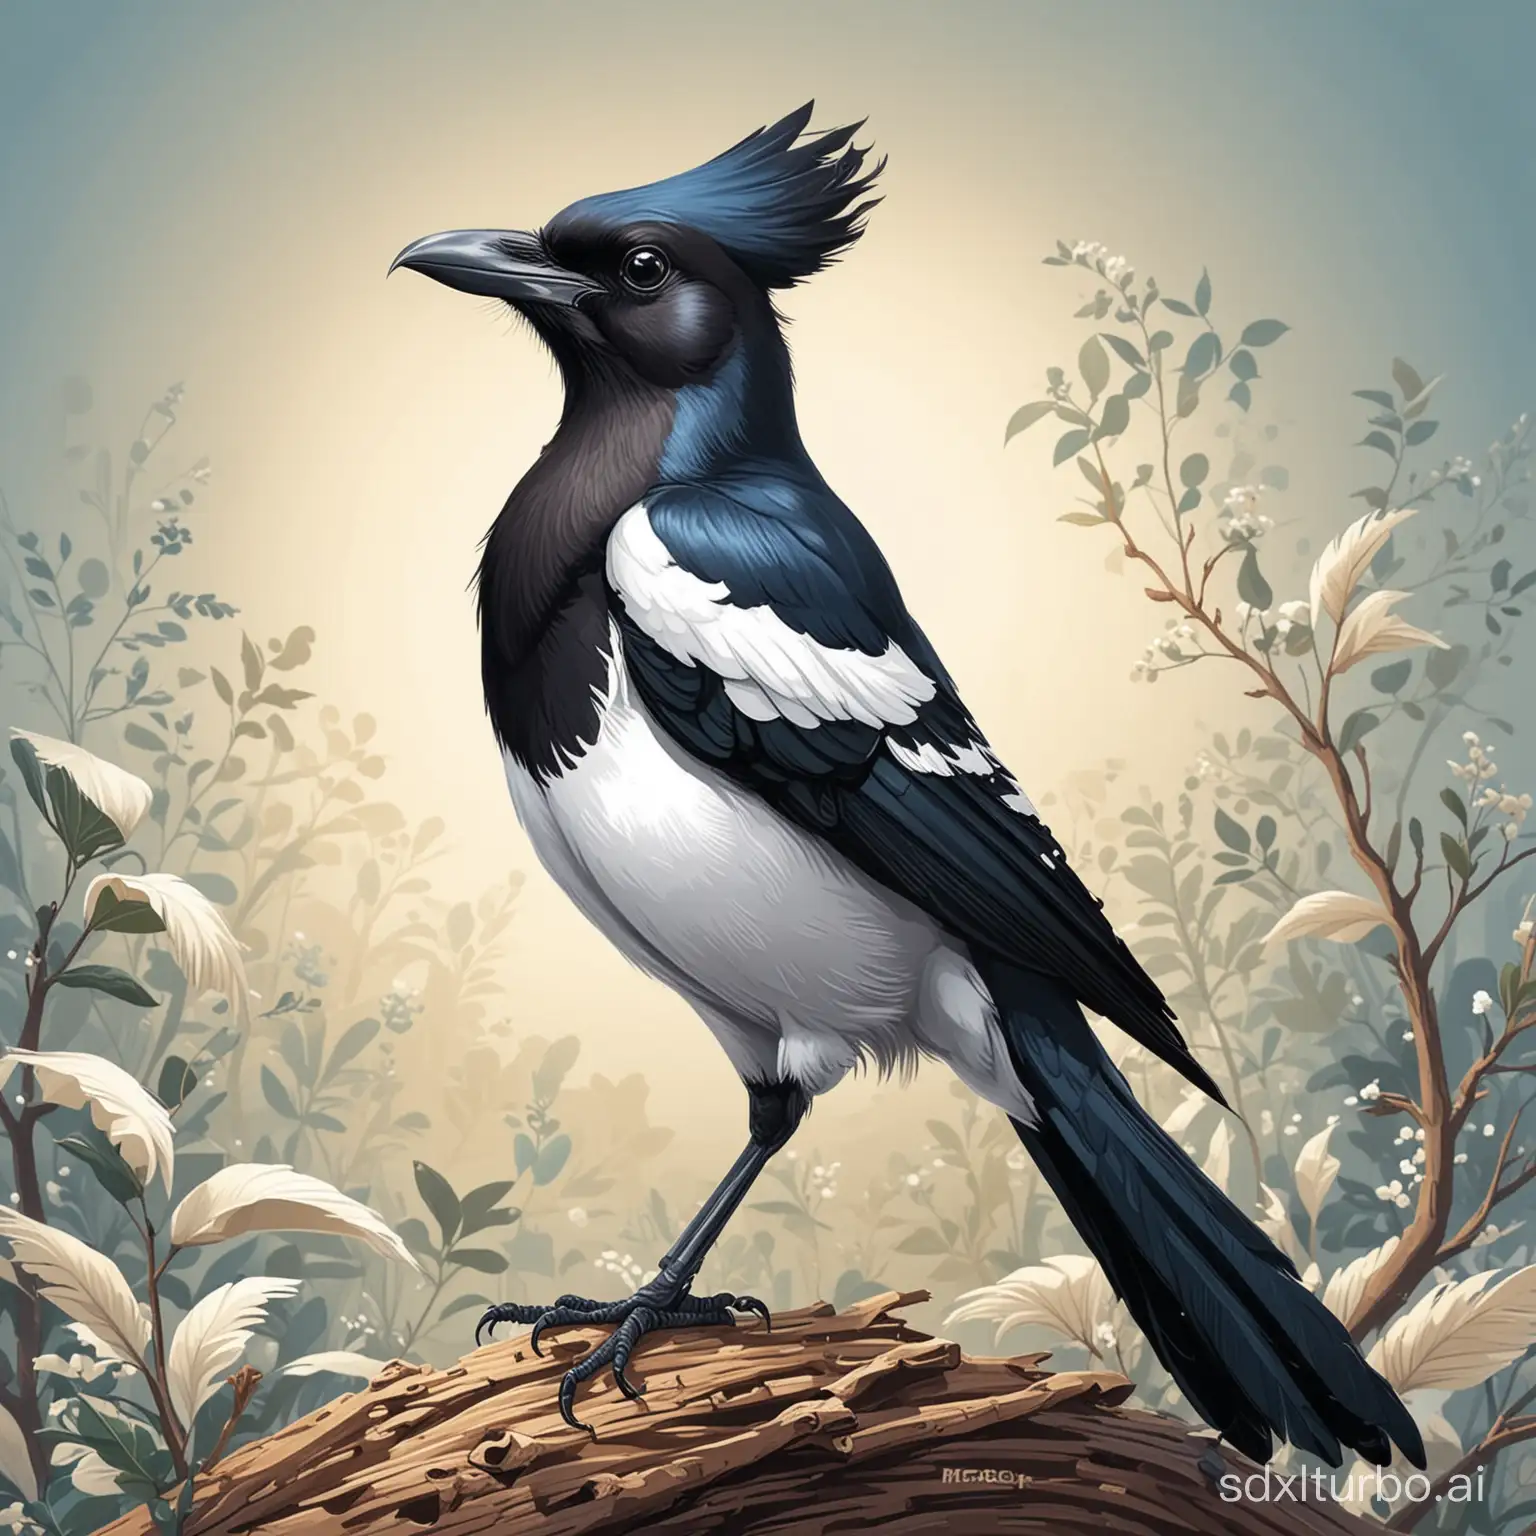 Cartoon-style Illustration of Magpies 
Cartoon-style Illustration of a Magpie